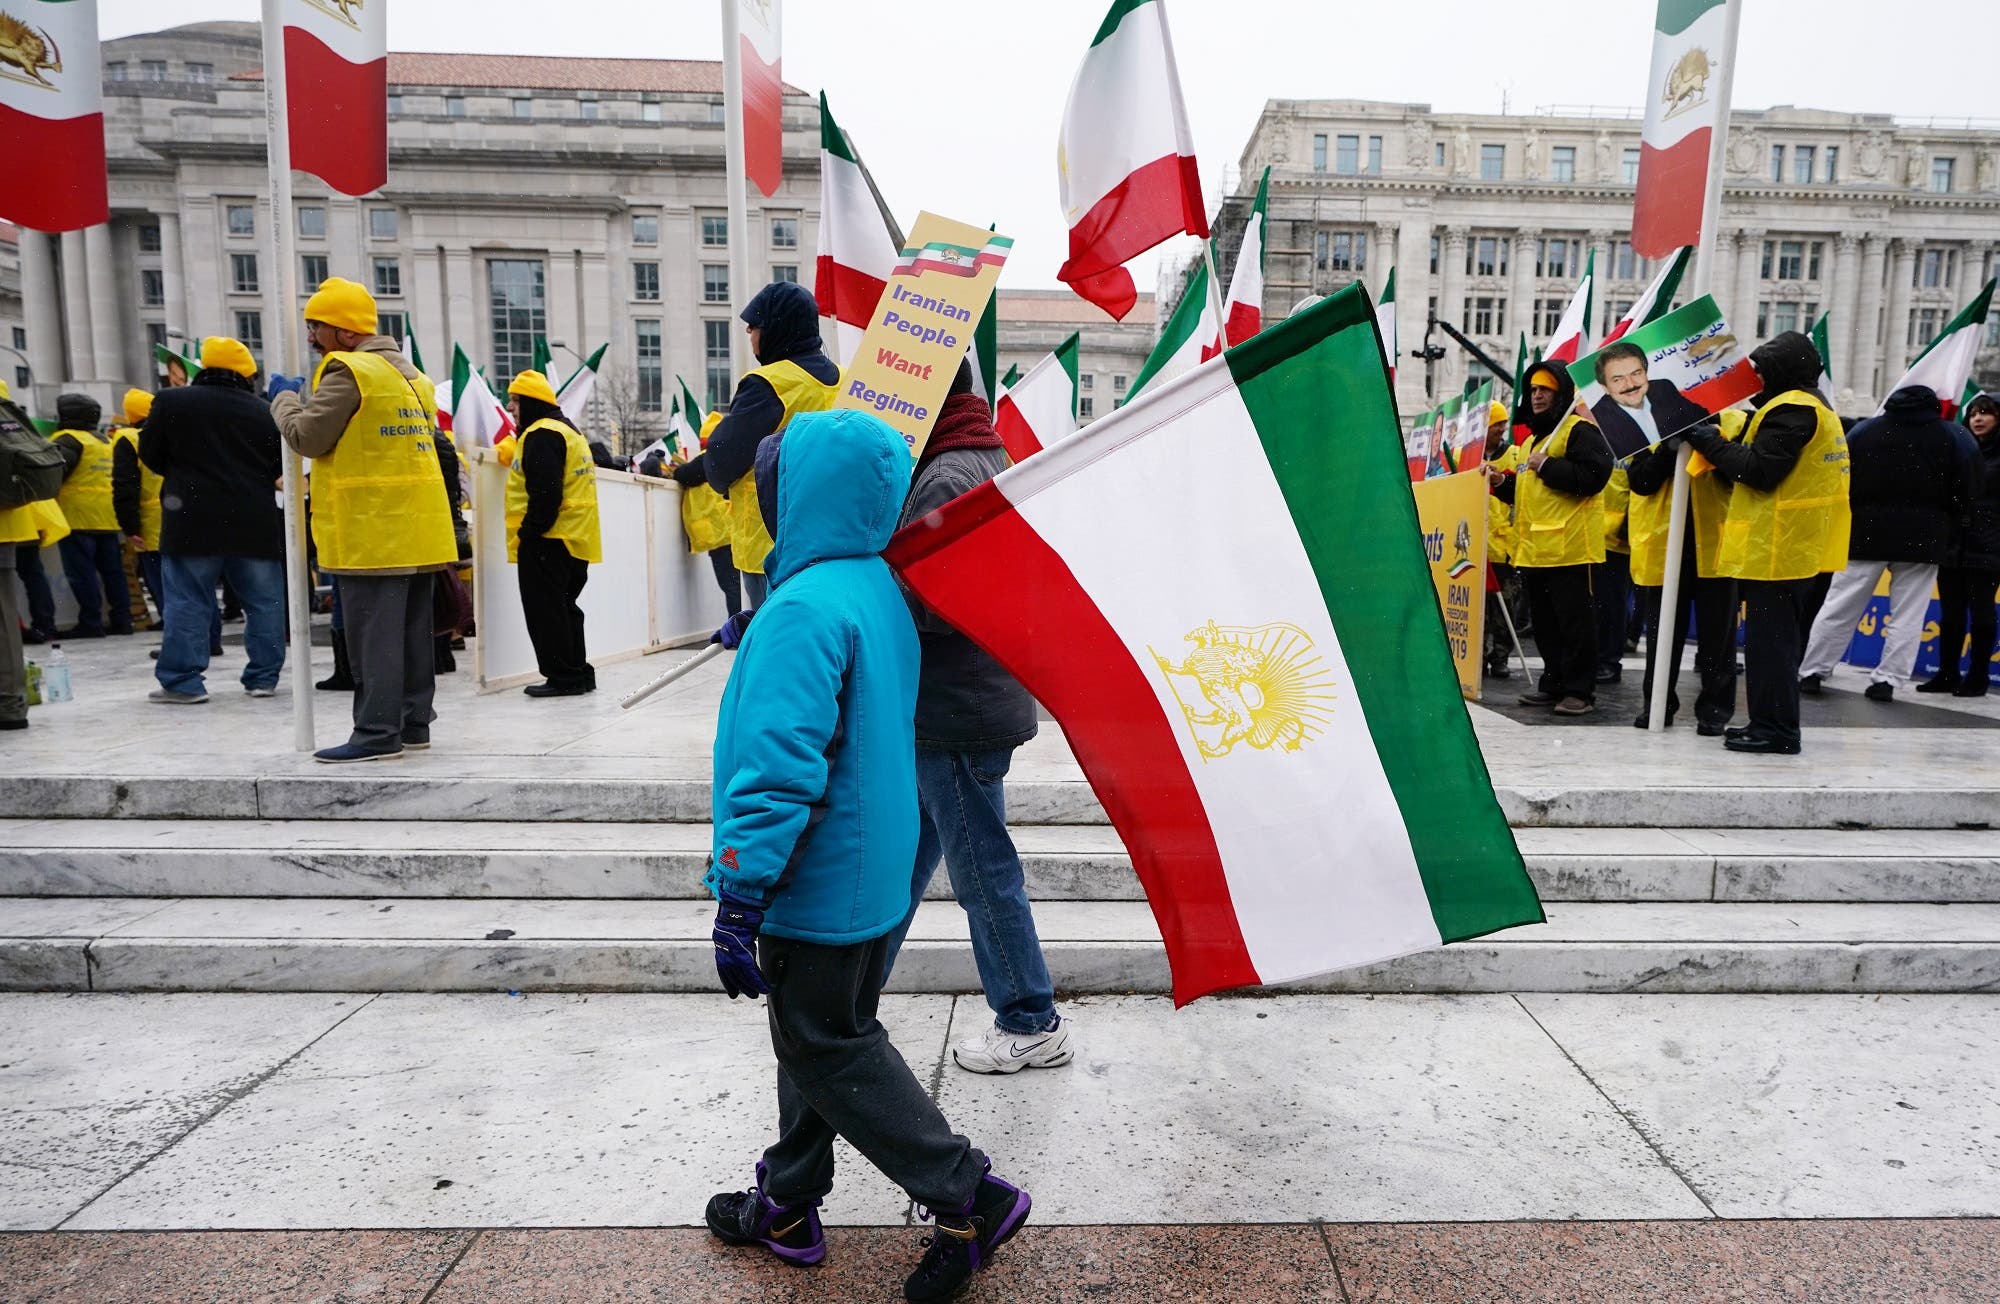 Washington protesters demand ‘regime change’ in Iran Al Arabiya English